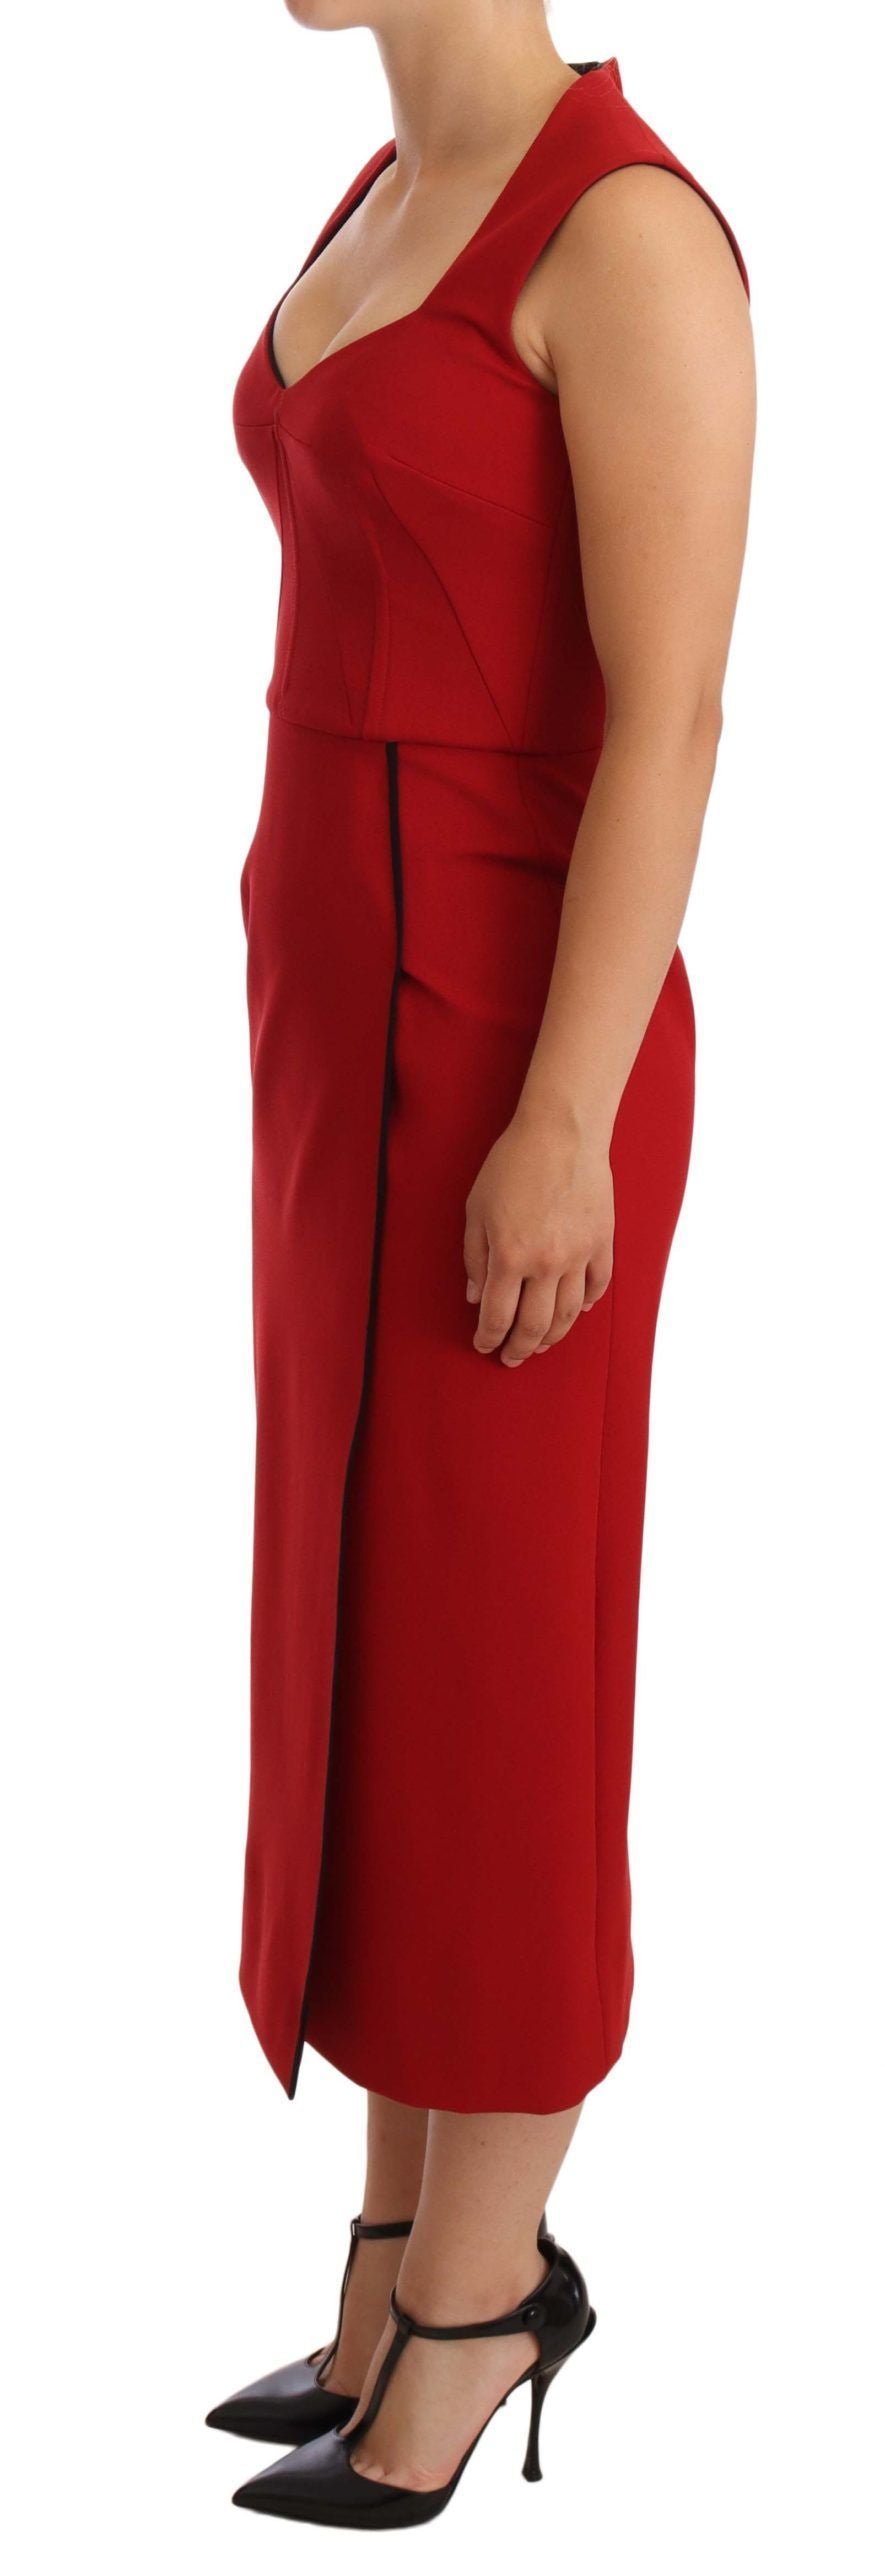 Elegant Sweetheart Midi Dress in Red